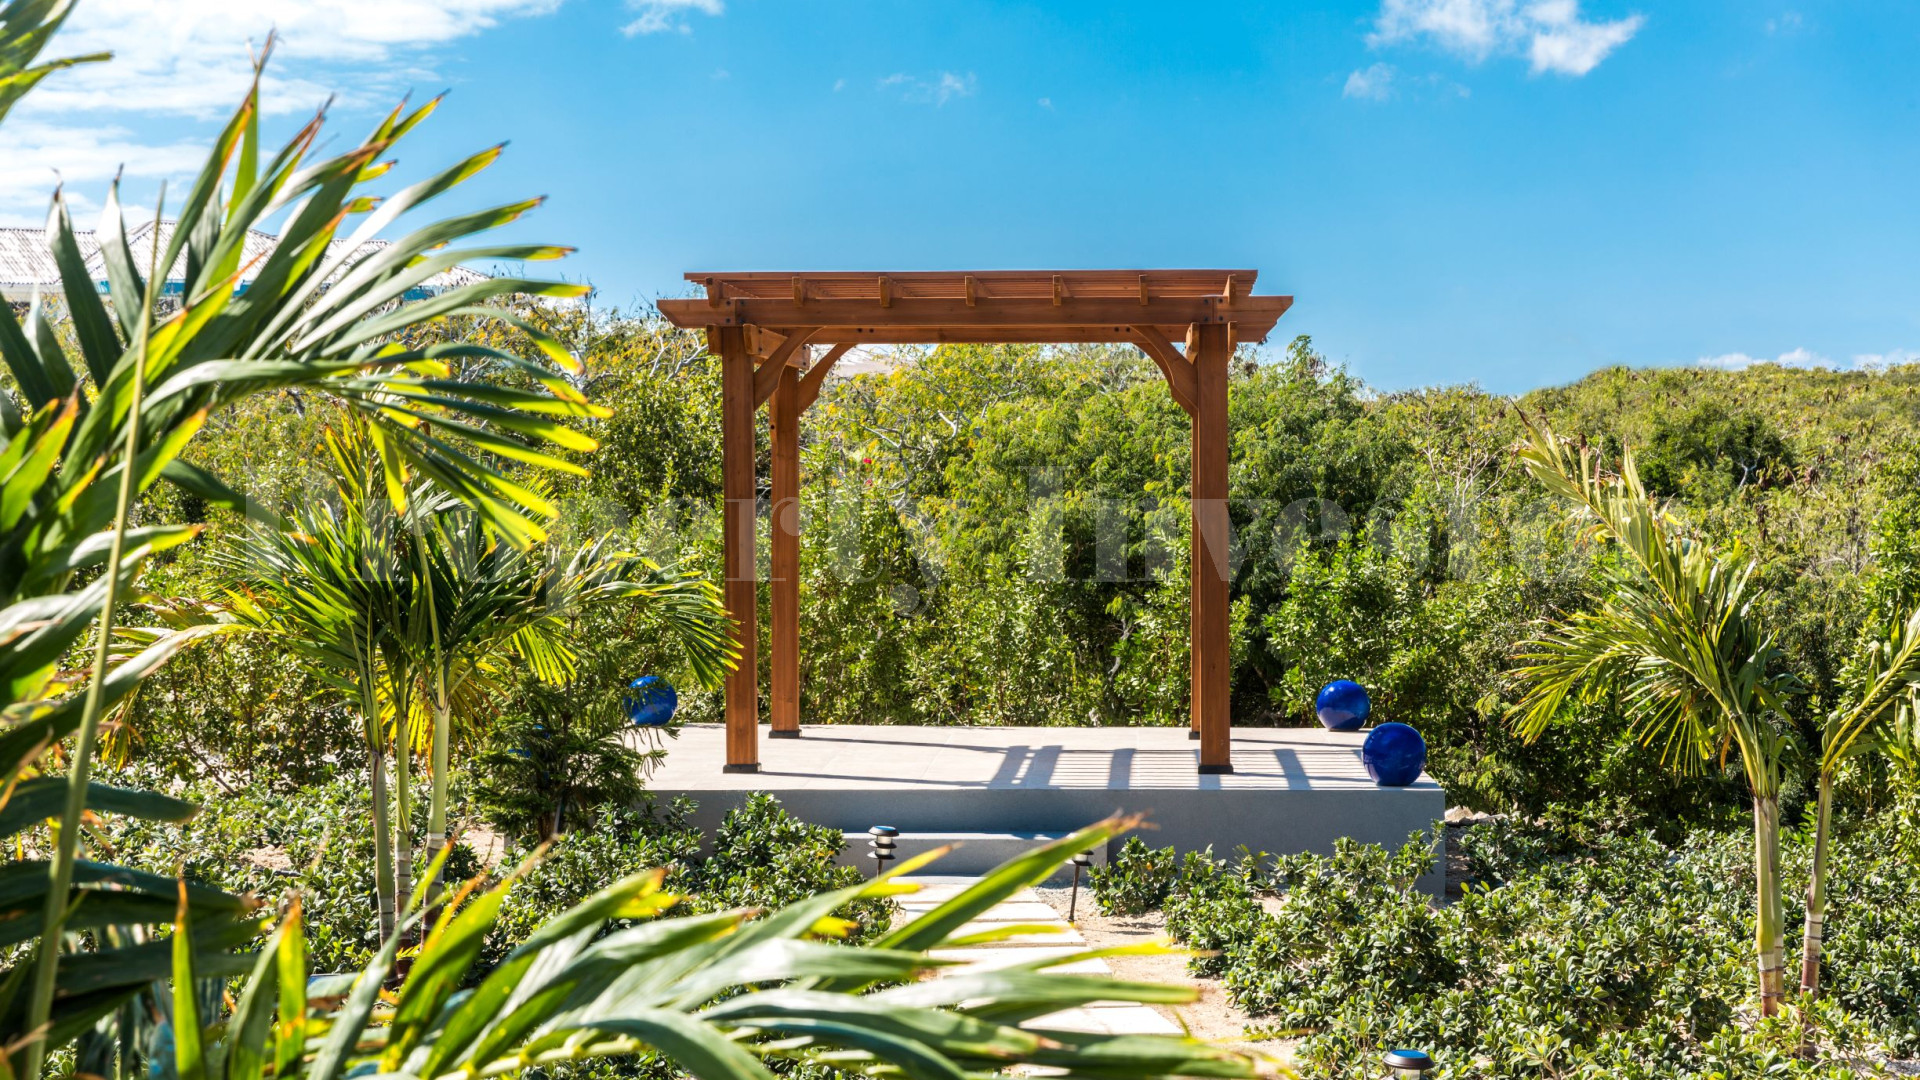 Stunning 4 Bedroom Modern Oceanview Villa for Sale in Turks & Caicos